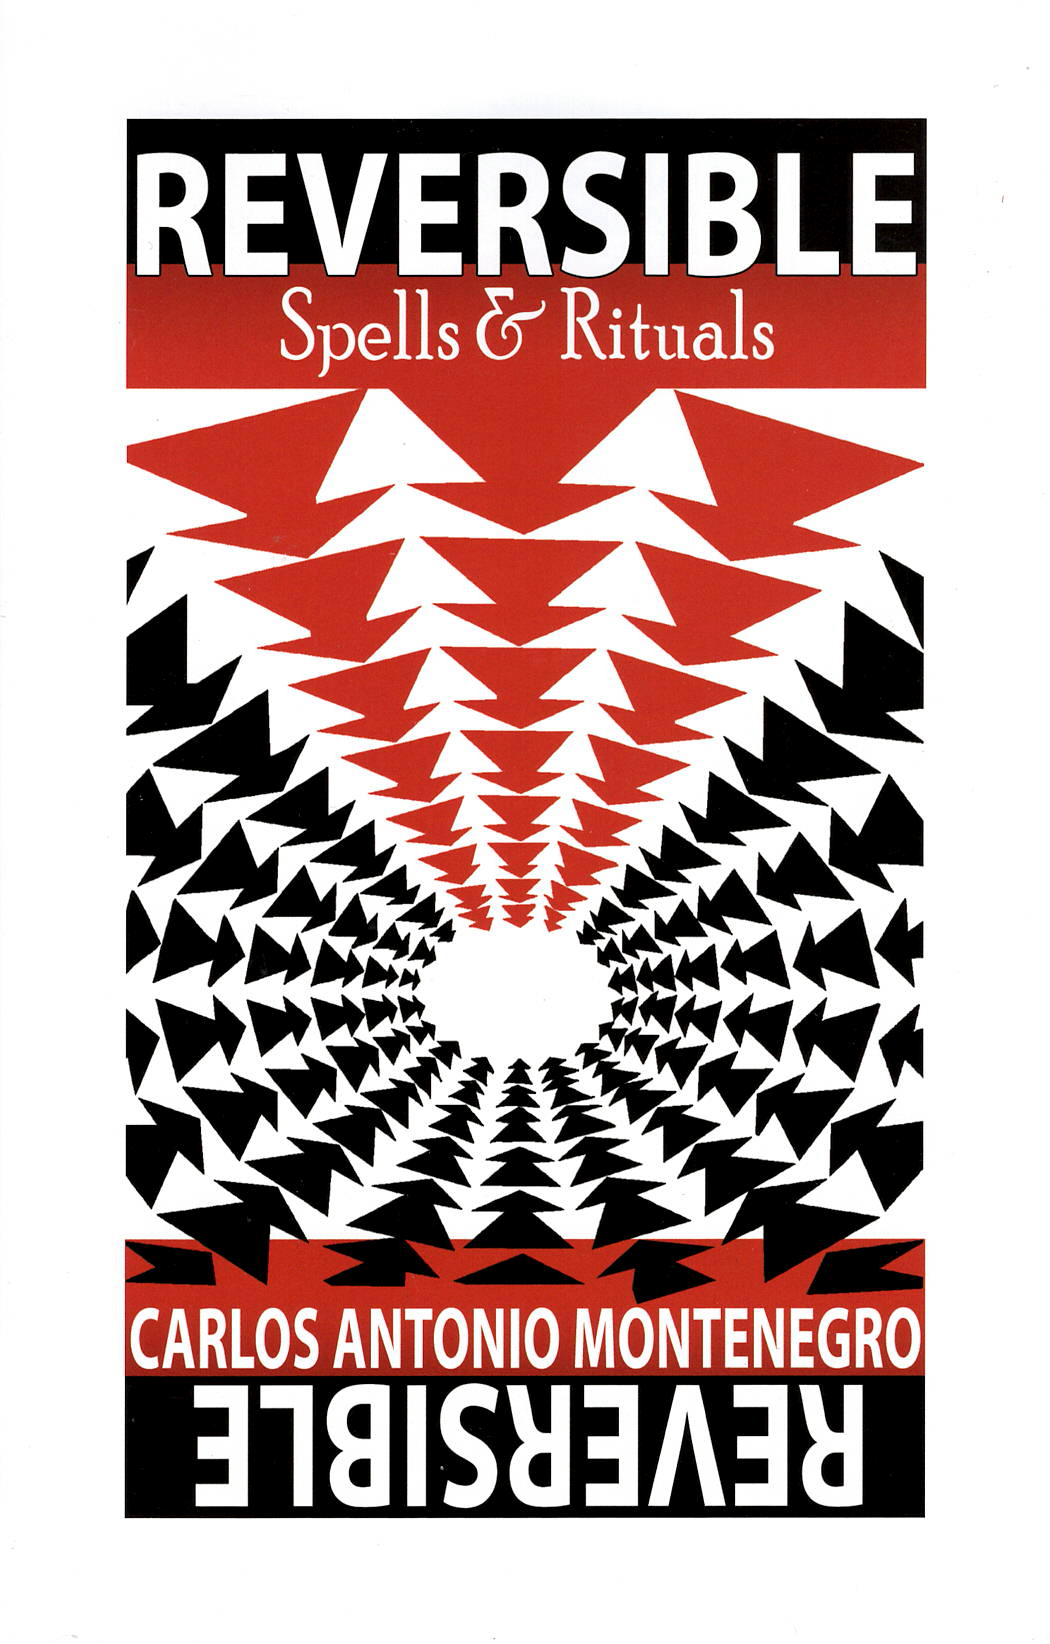 Reversible Spells and Rituals, by Carlos Antonio Montenegro